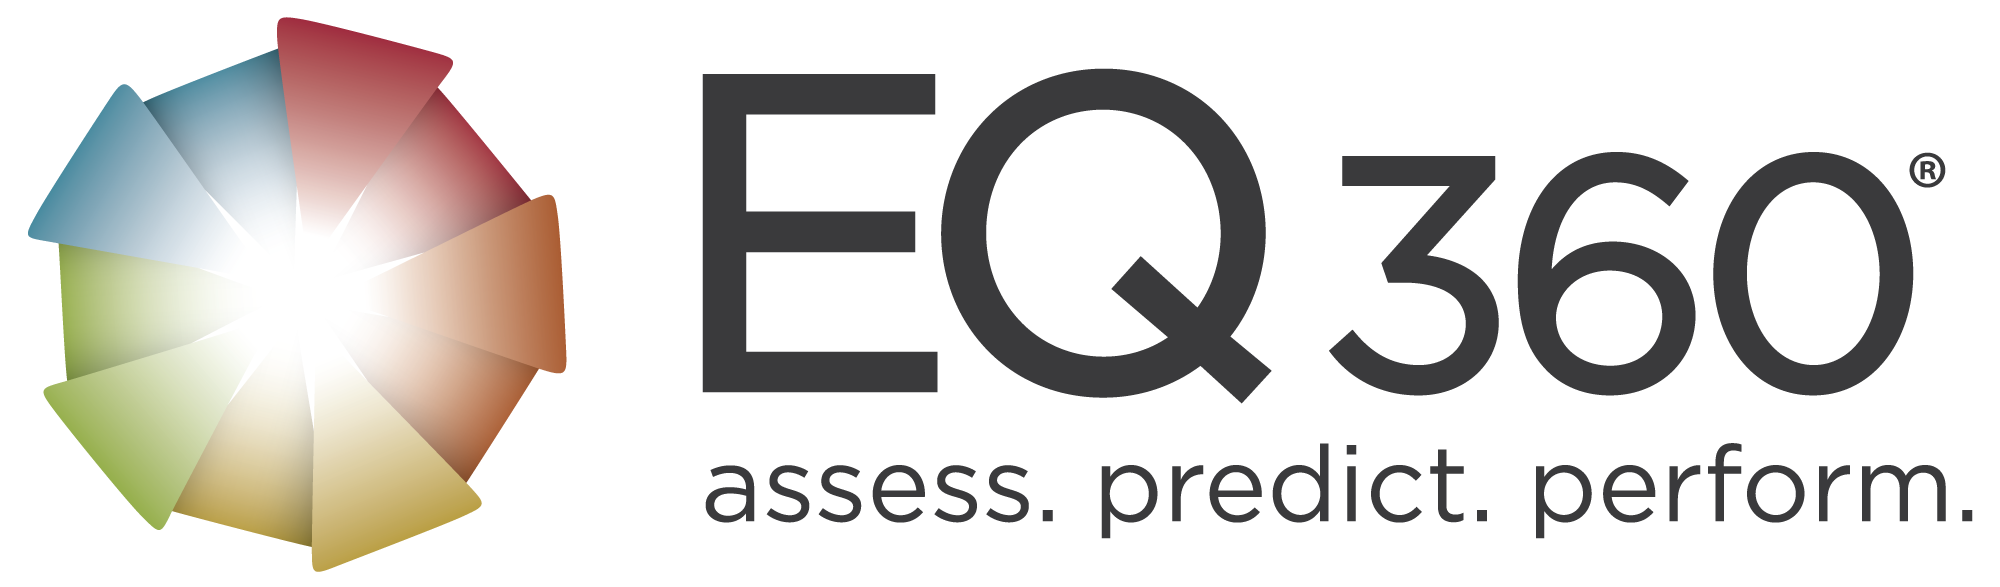 EQ360 assess, predict, perform, certification logo for Minett Consulting